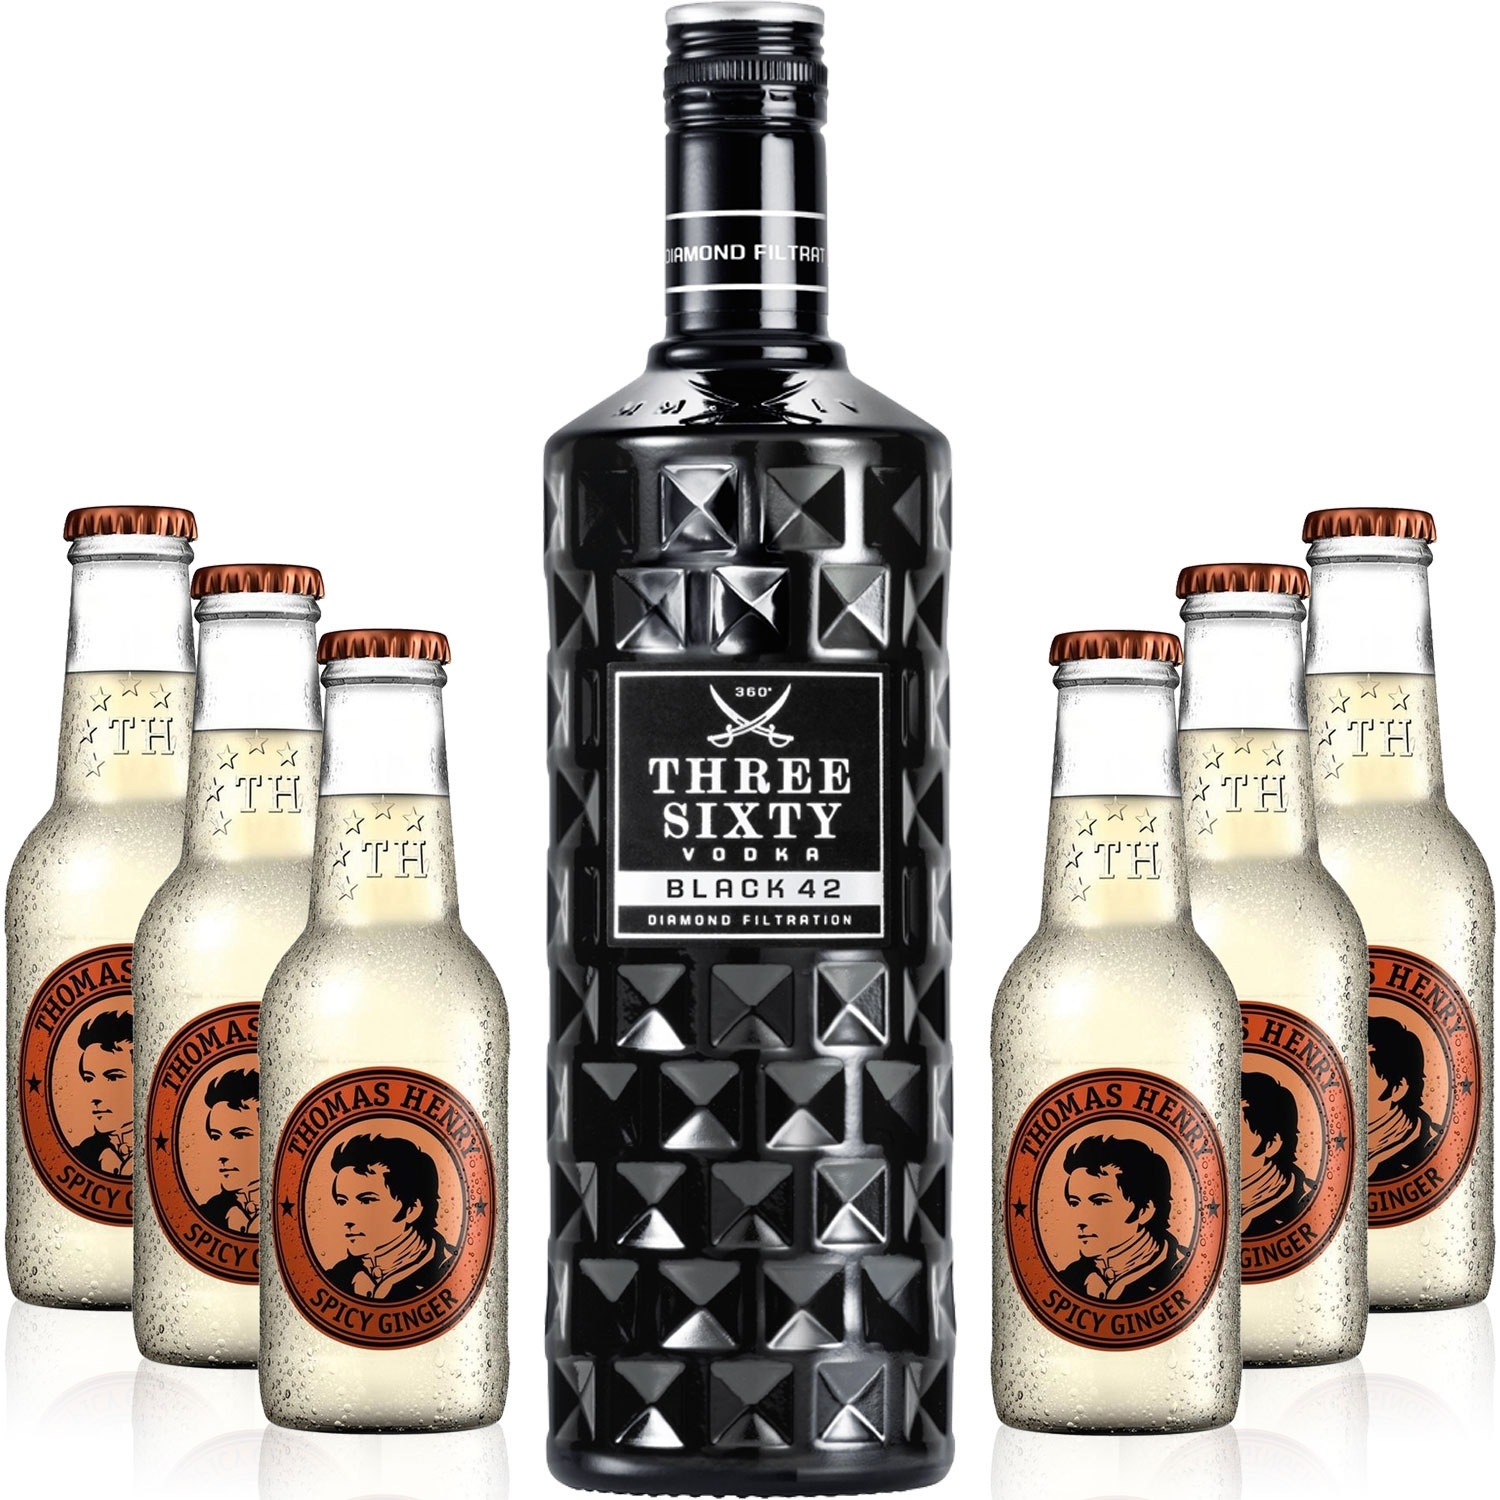 Three Sixty Moscow Mule Set - Three Sixty Black 42 Vodka 0,7l 700ml (42% Vol) + 6x Thomas Henry Spicy Ginger 200ml -[Enthält Sulfite] - Inkl. Pfand MEHRWEG